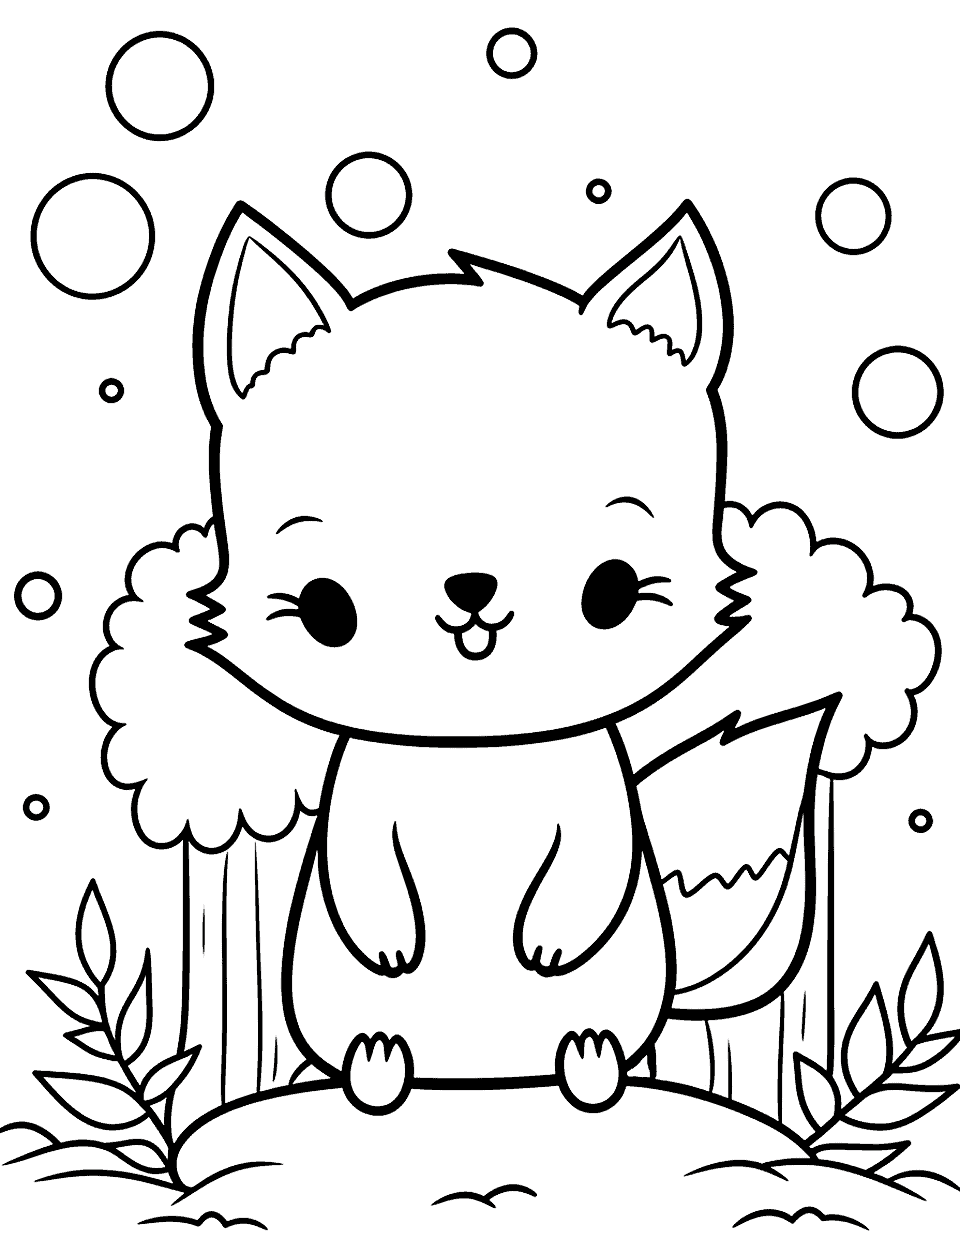 Wolf's Whimsical Woodland Kawaii Coloring Page - A Kawaii wolf exploring a whimsical woodland.